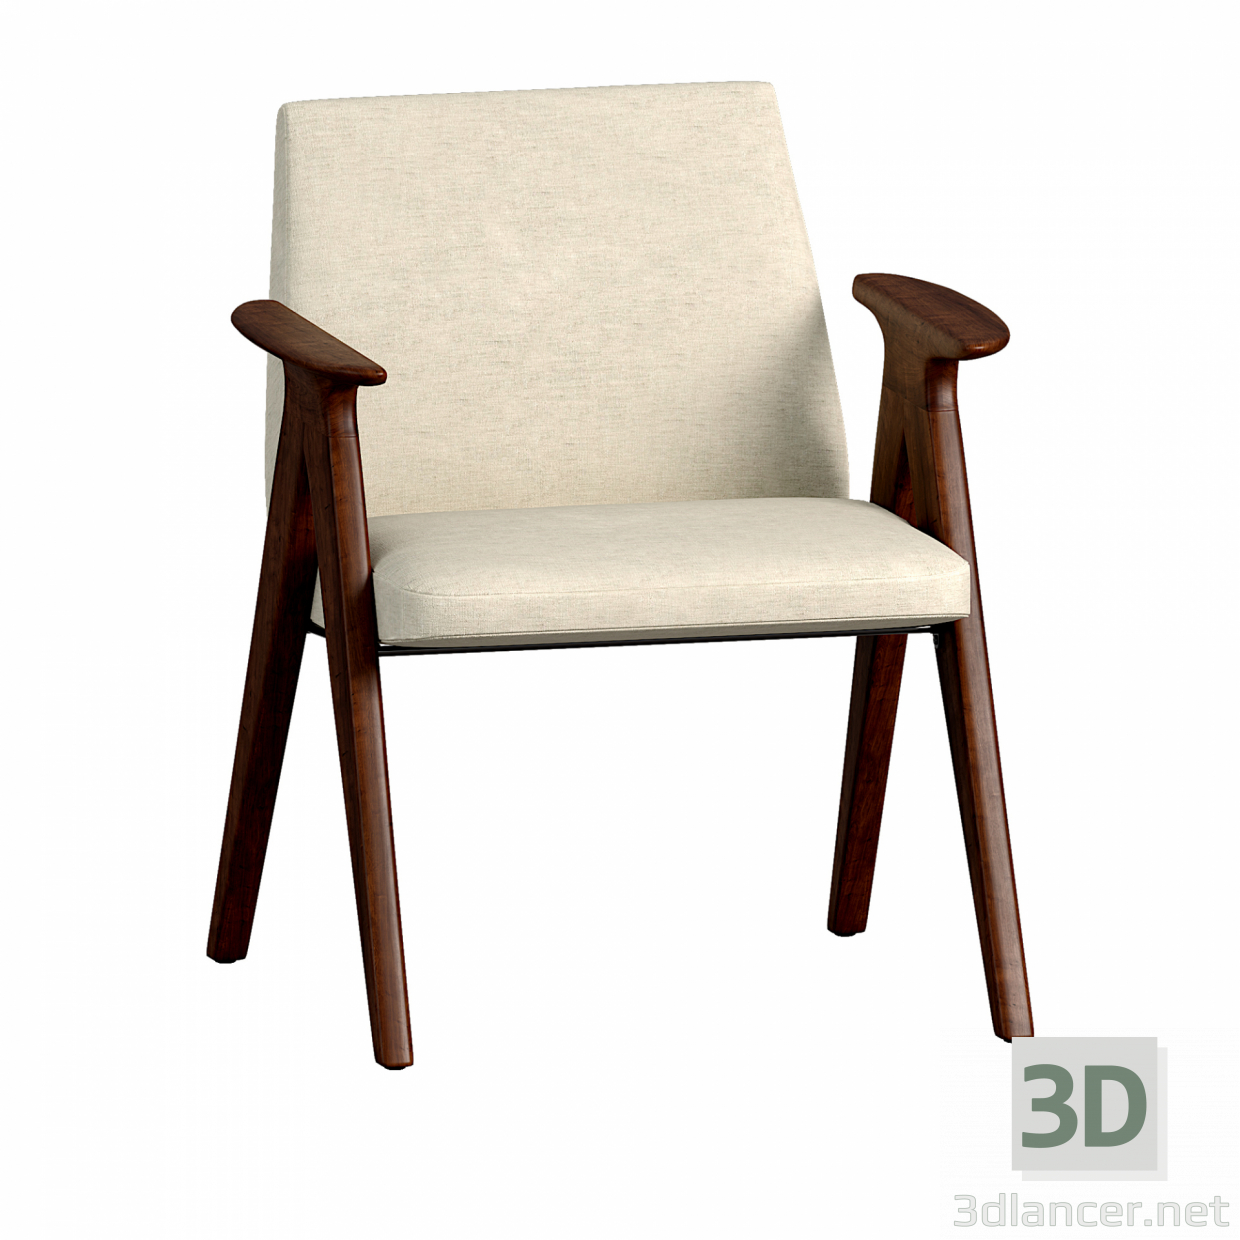 3d Libera armchair model buy - render